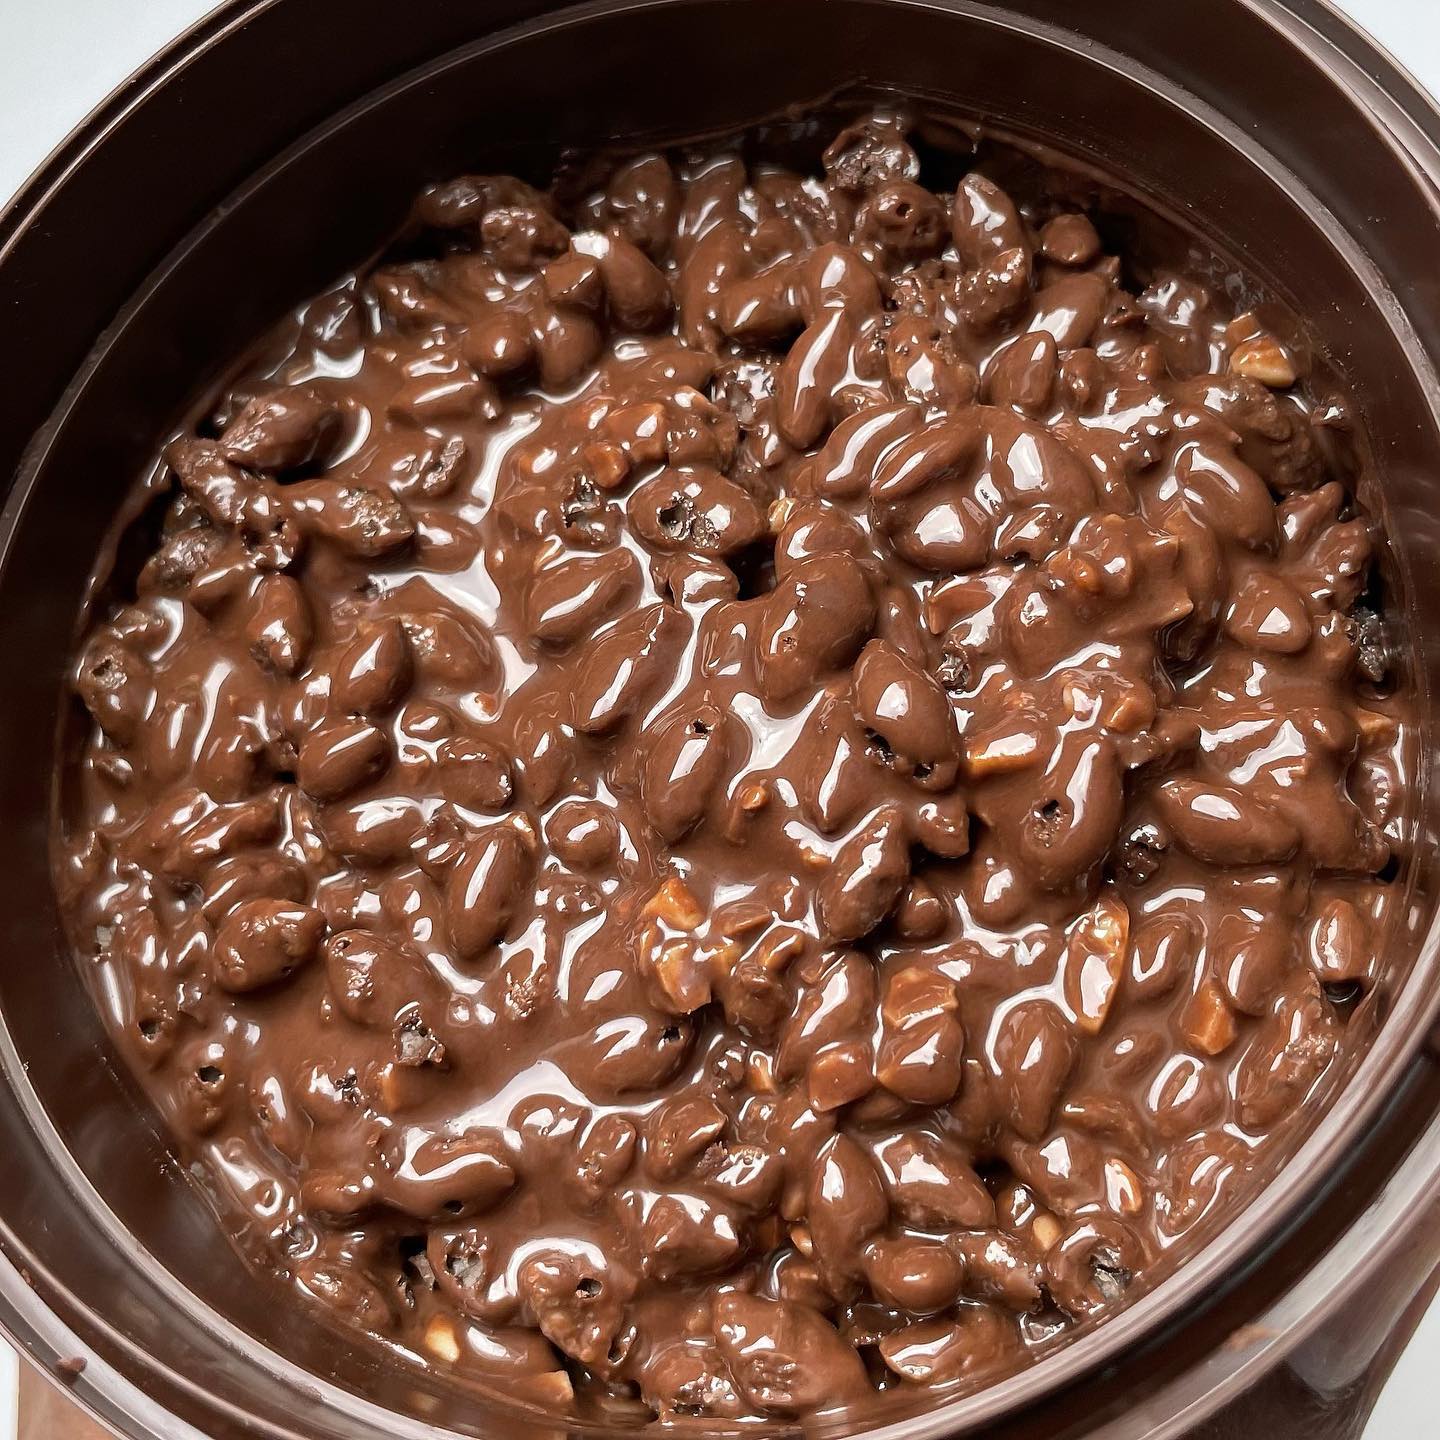 Choco Albab Chocolate Cereals (Halal)